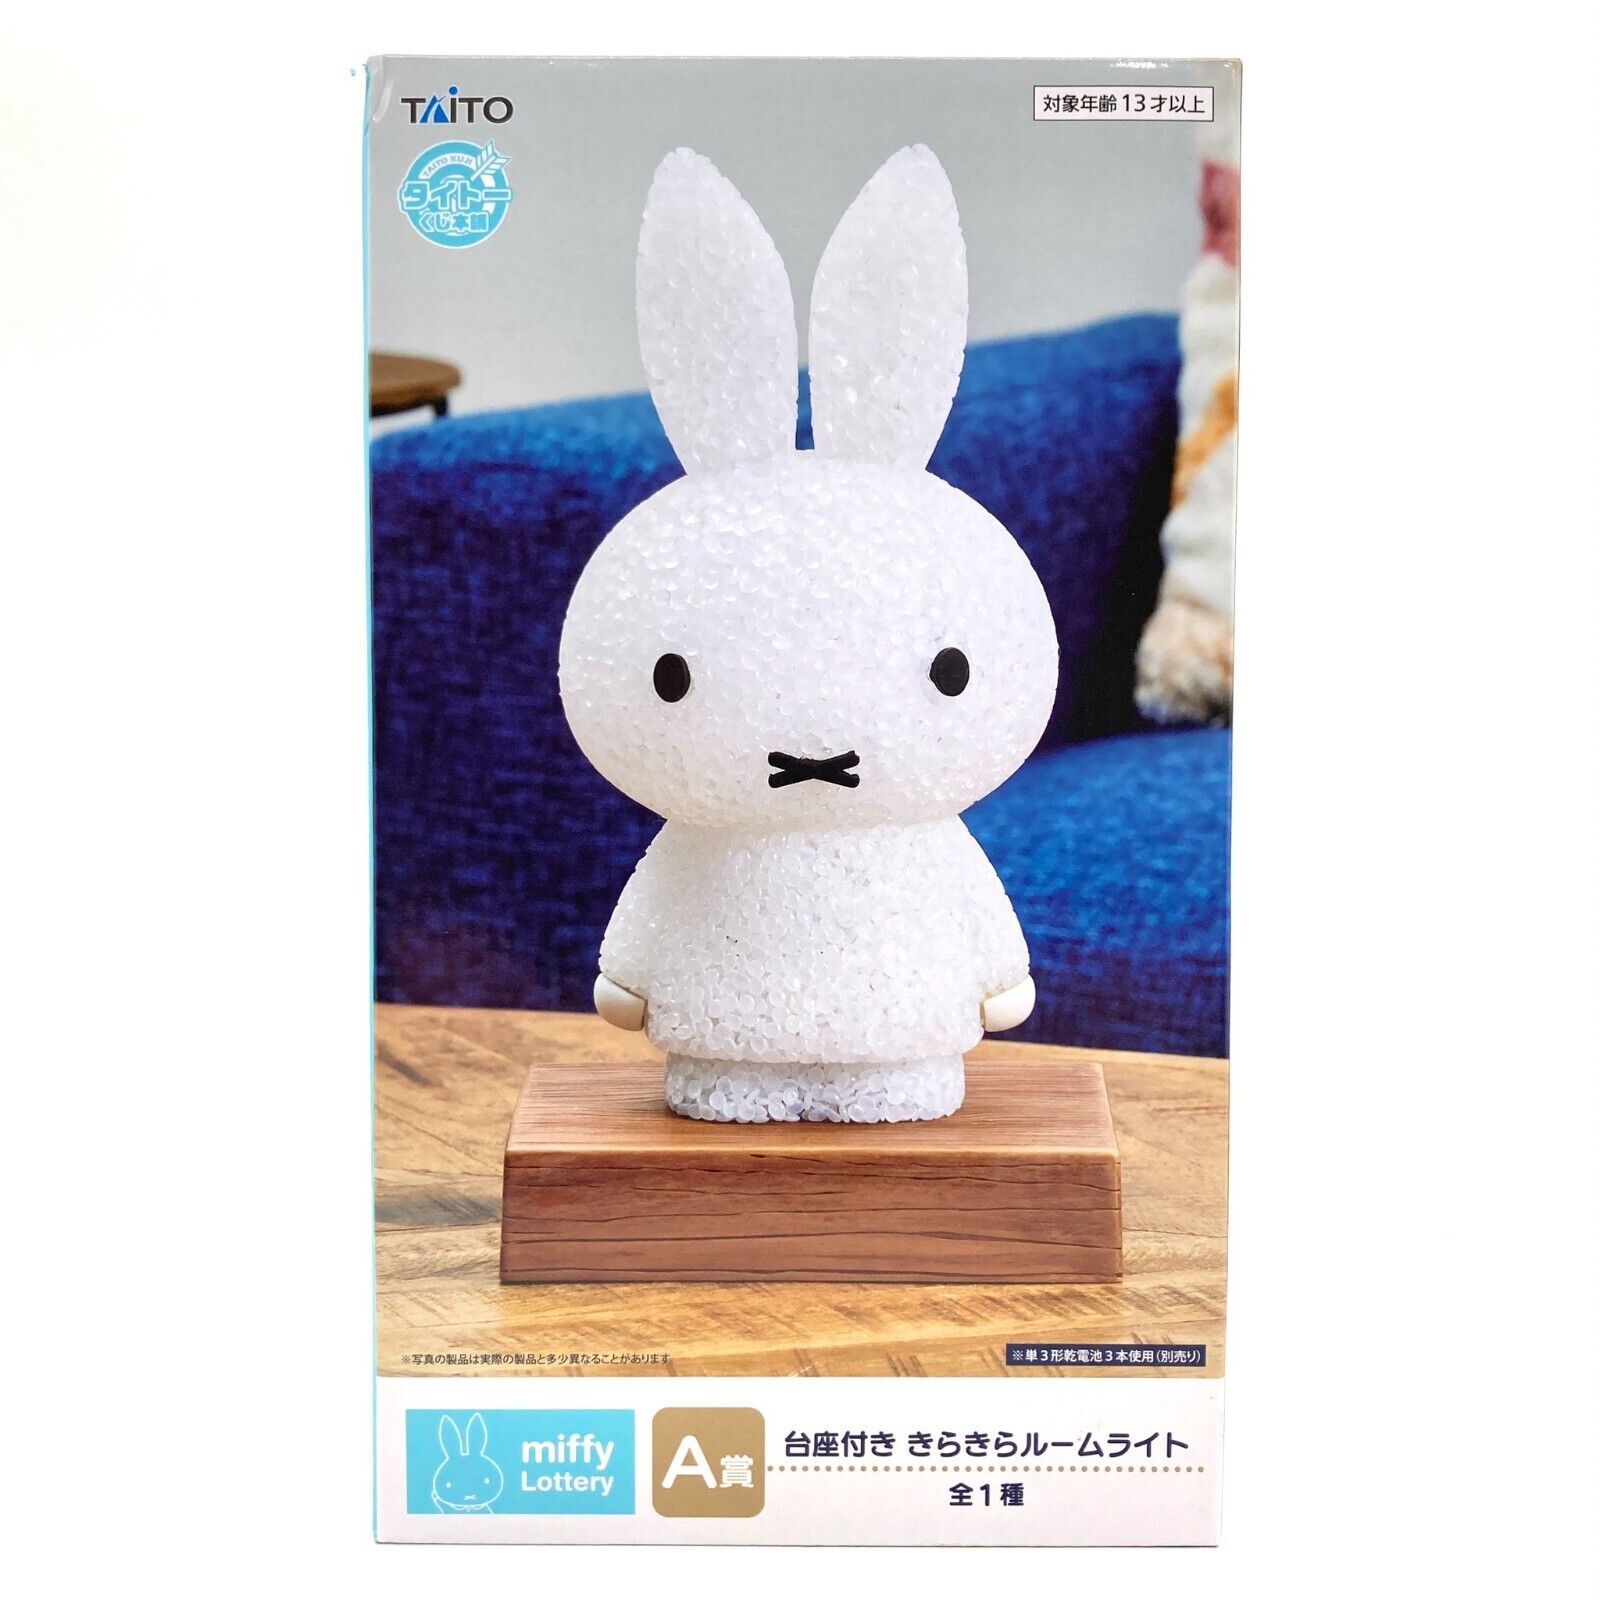 Onderdrukker Haast je salami Miffy Lottery Room Lamp Light Figure TAiTO Kuji A award Rare Japan Cute  Gift | eBay